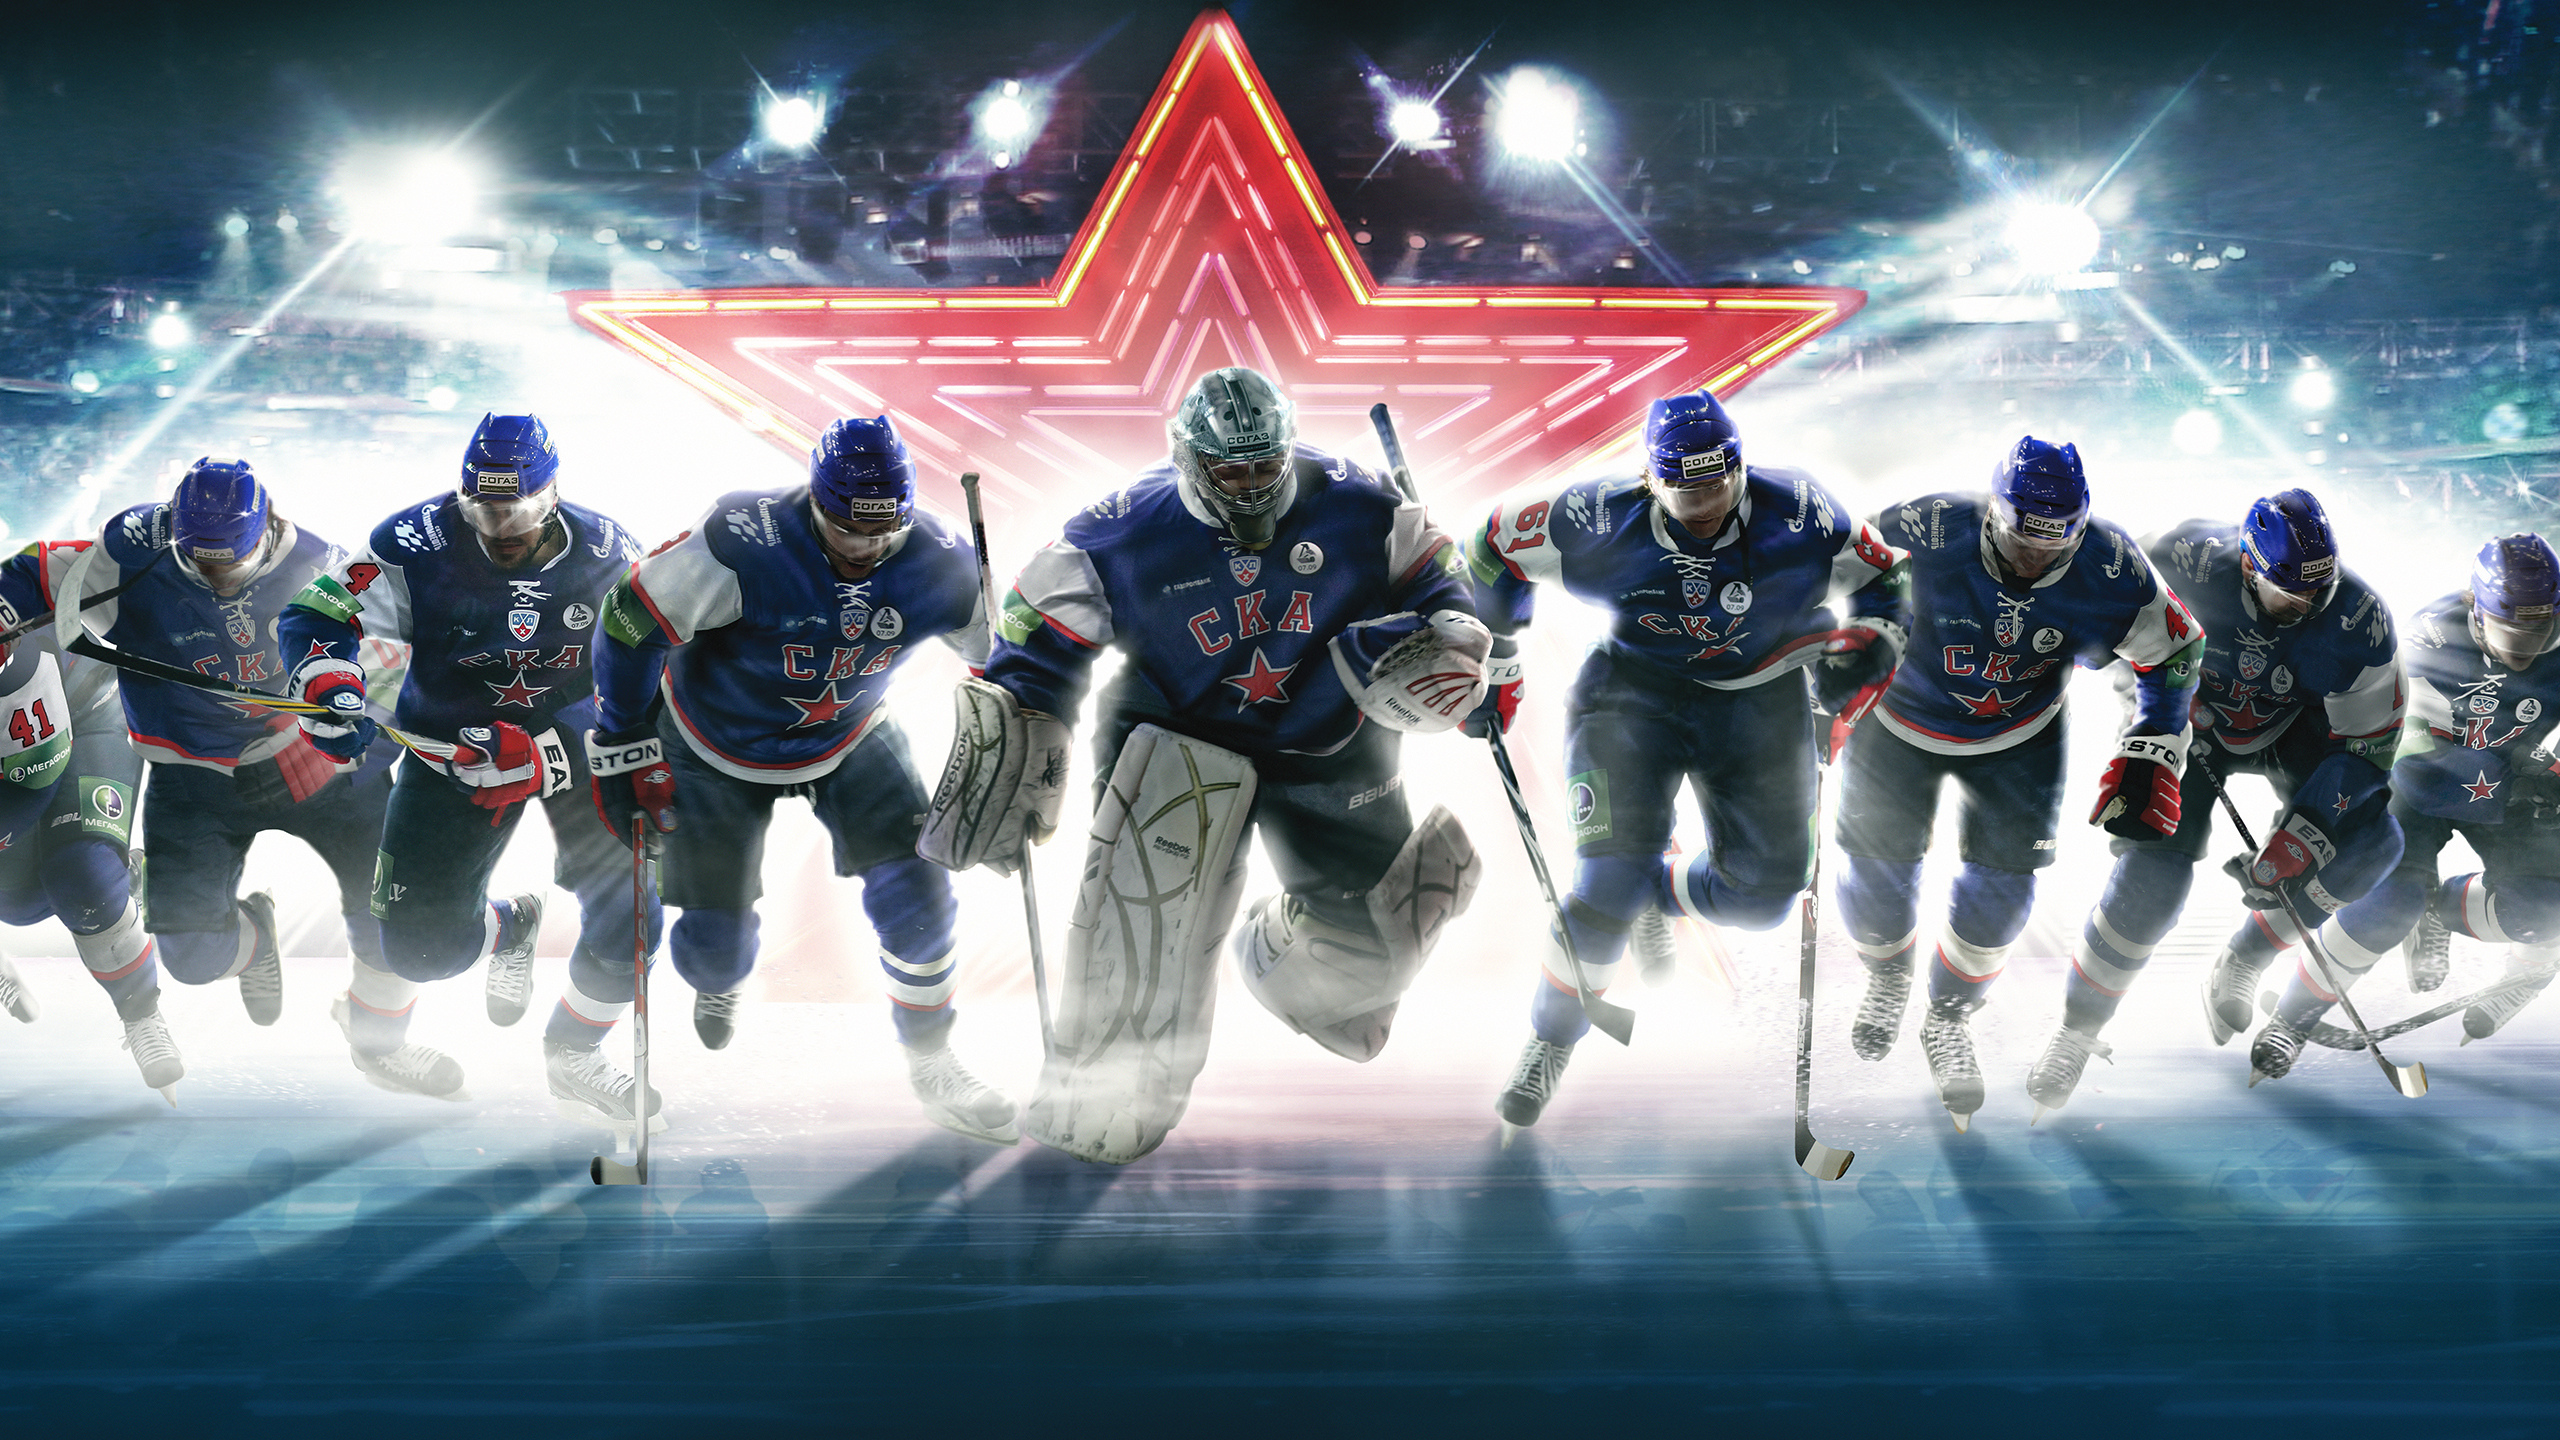 Image: Hockey, team, club, SKA, star, ice, goalkeeper, sticks, uniform